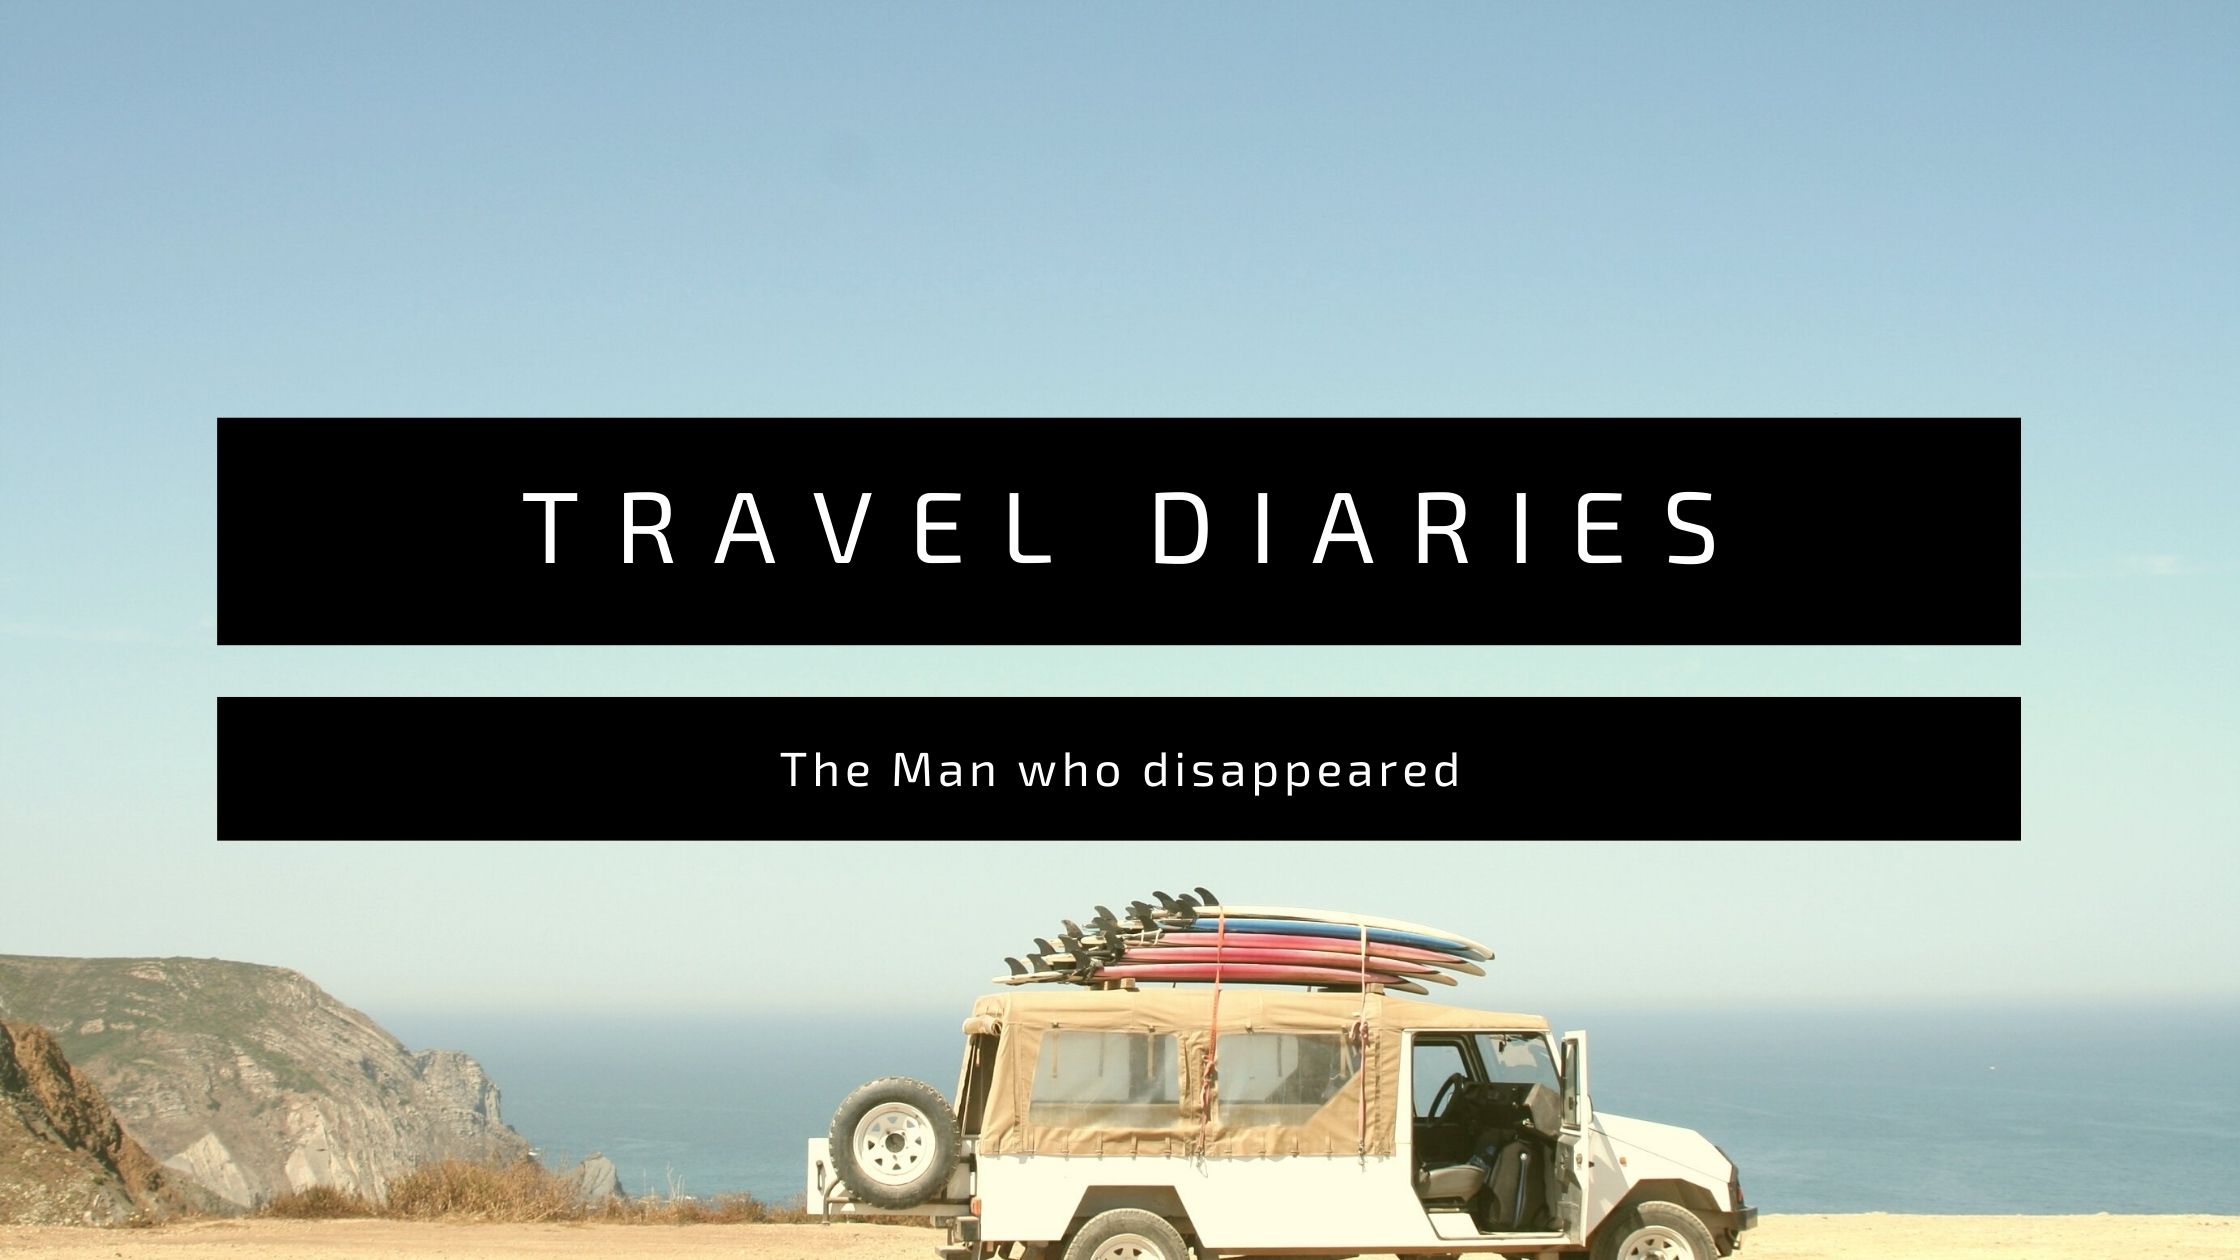 My Travel Diaries